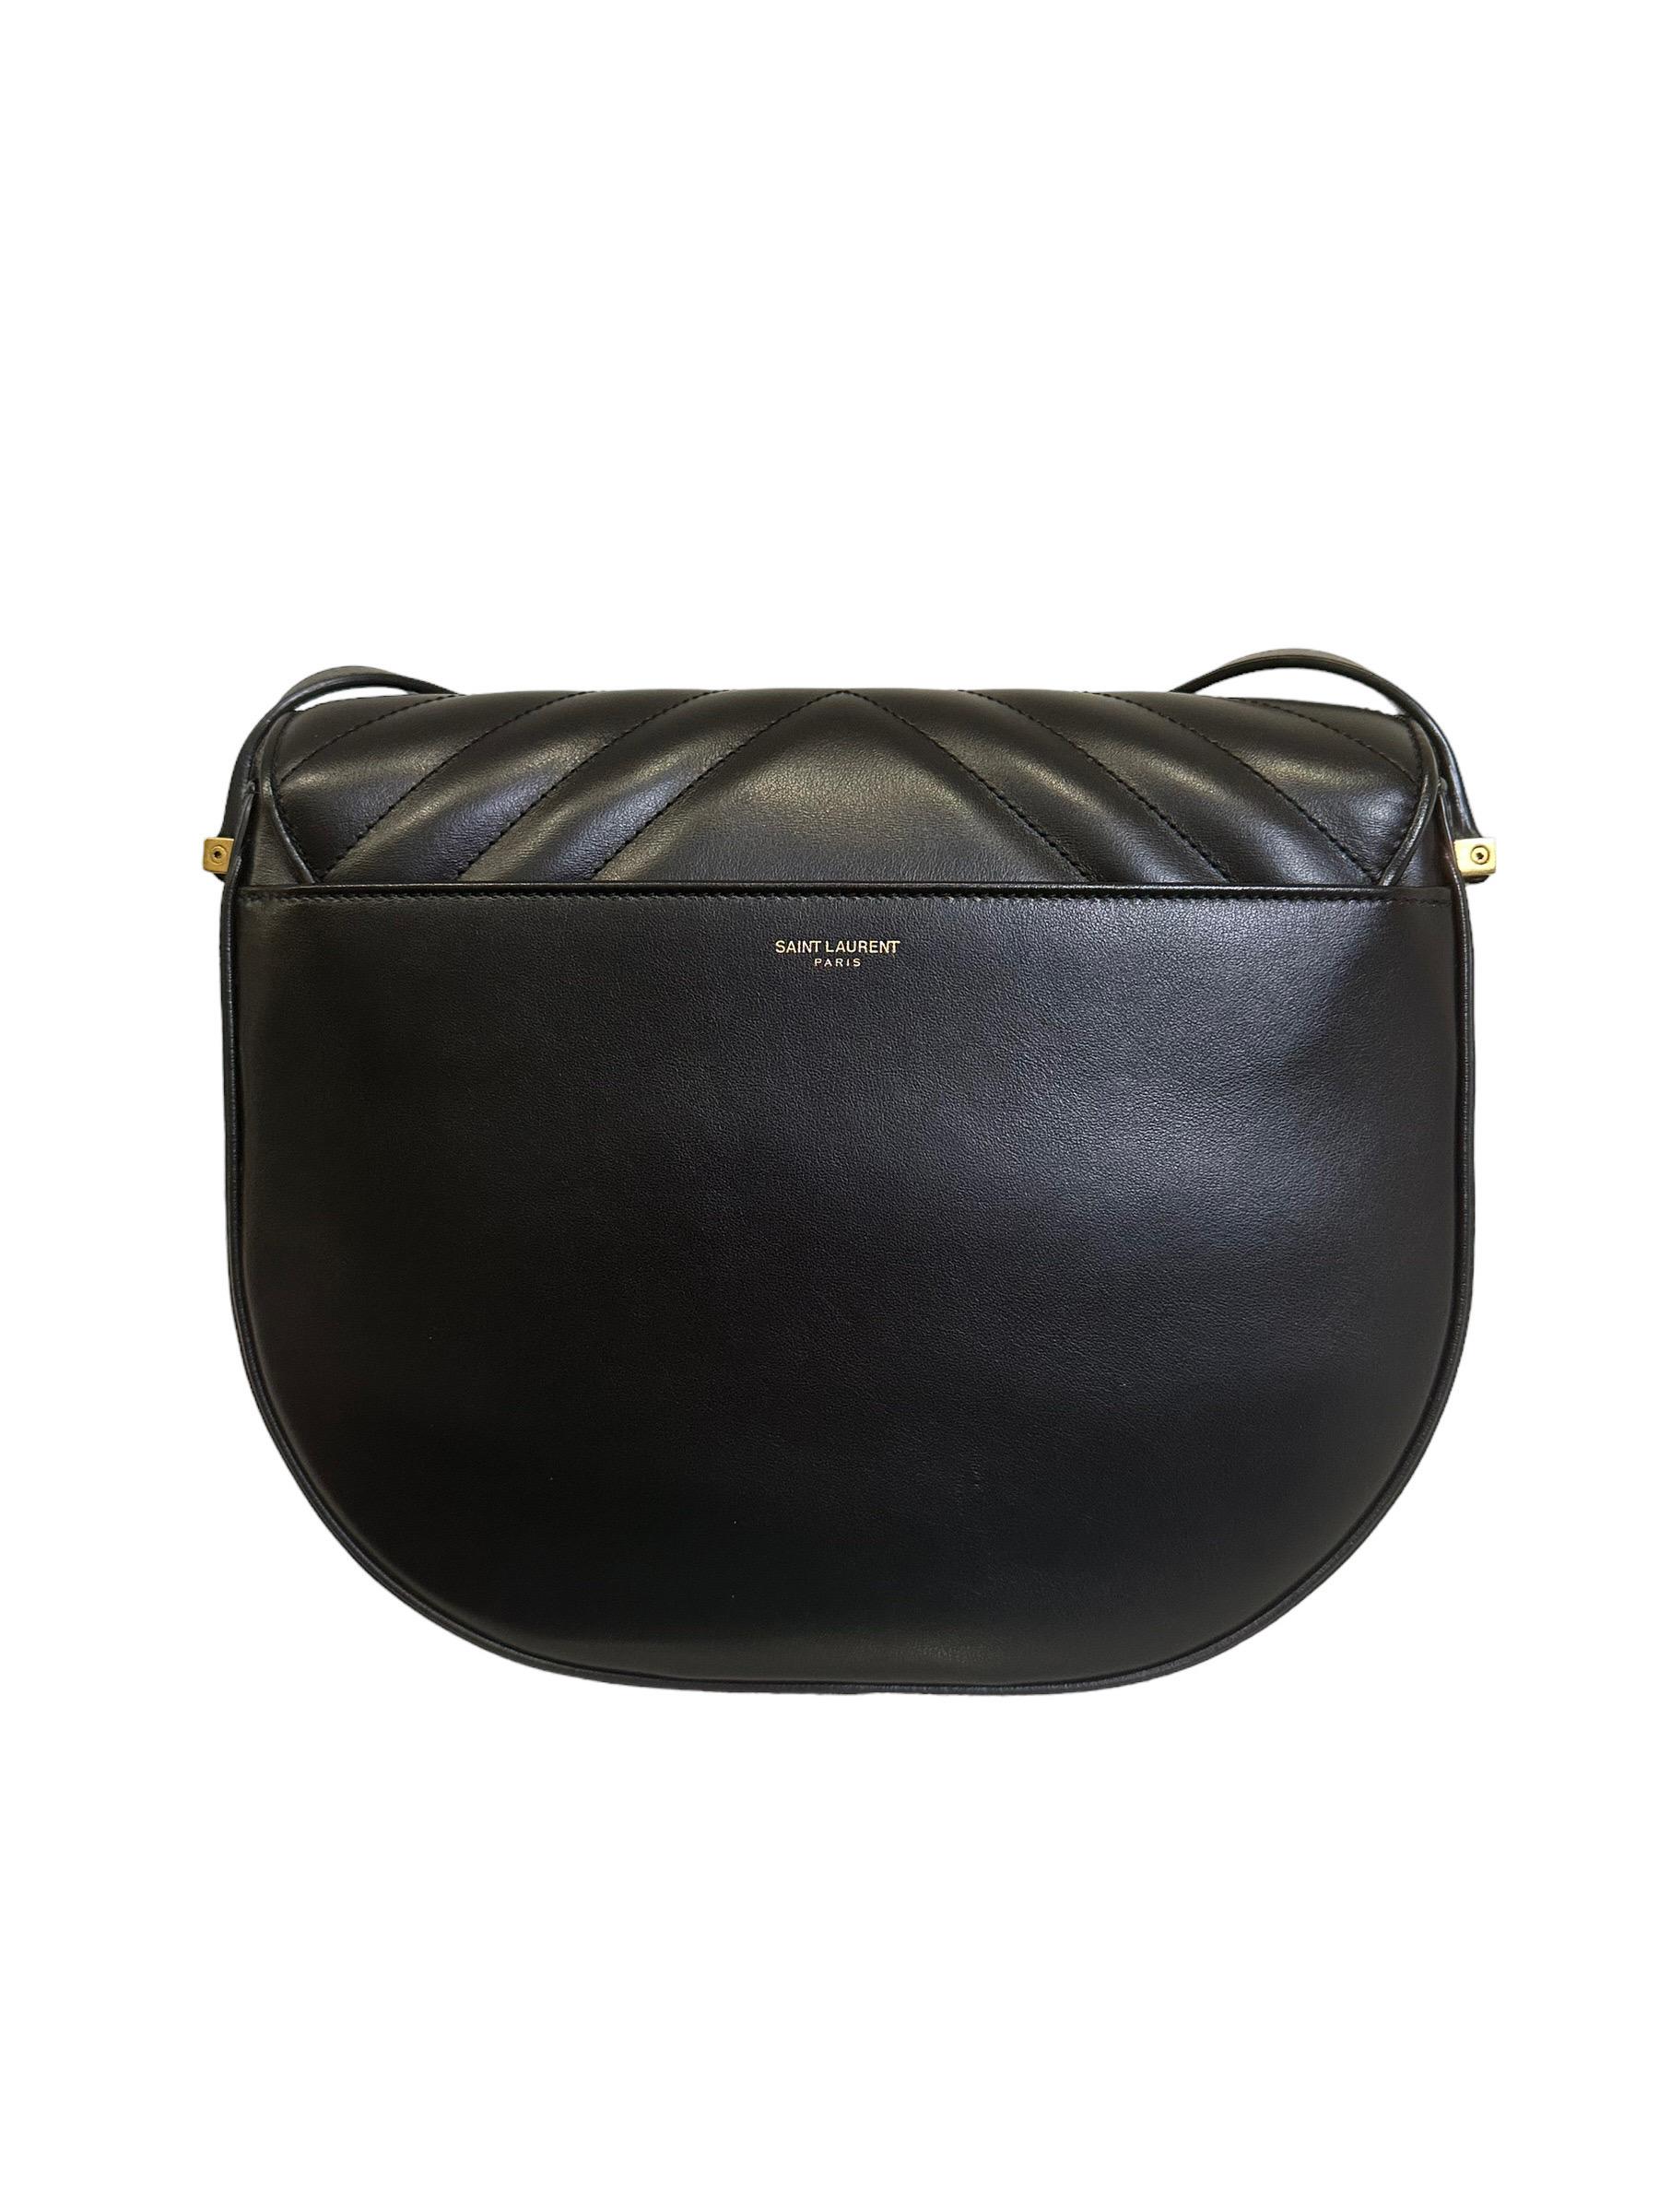 Women's Saint Laurent Joan Black Leather Shoulder Bag